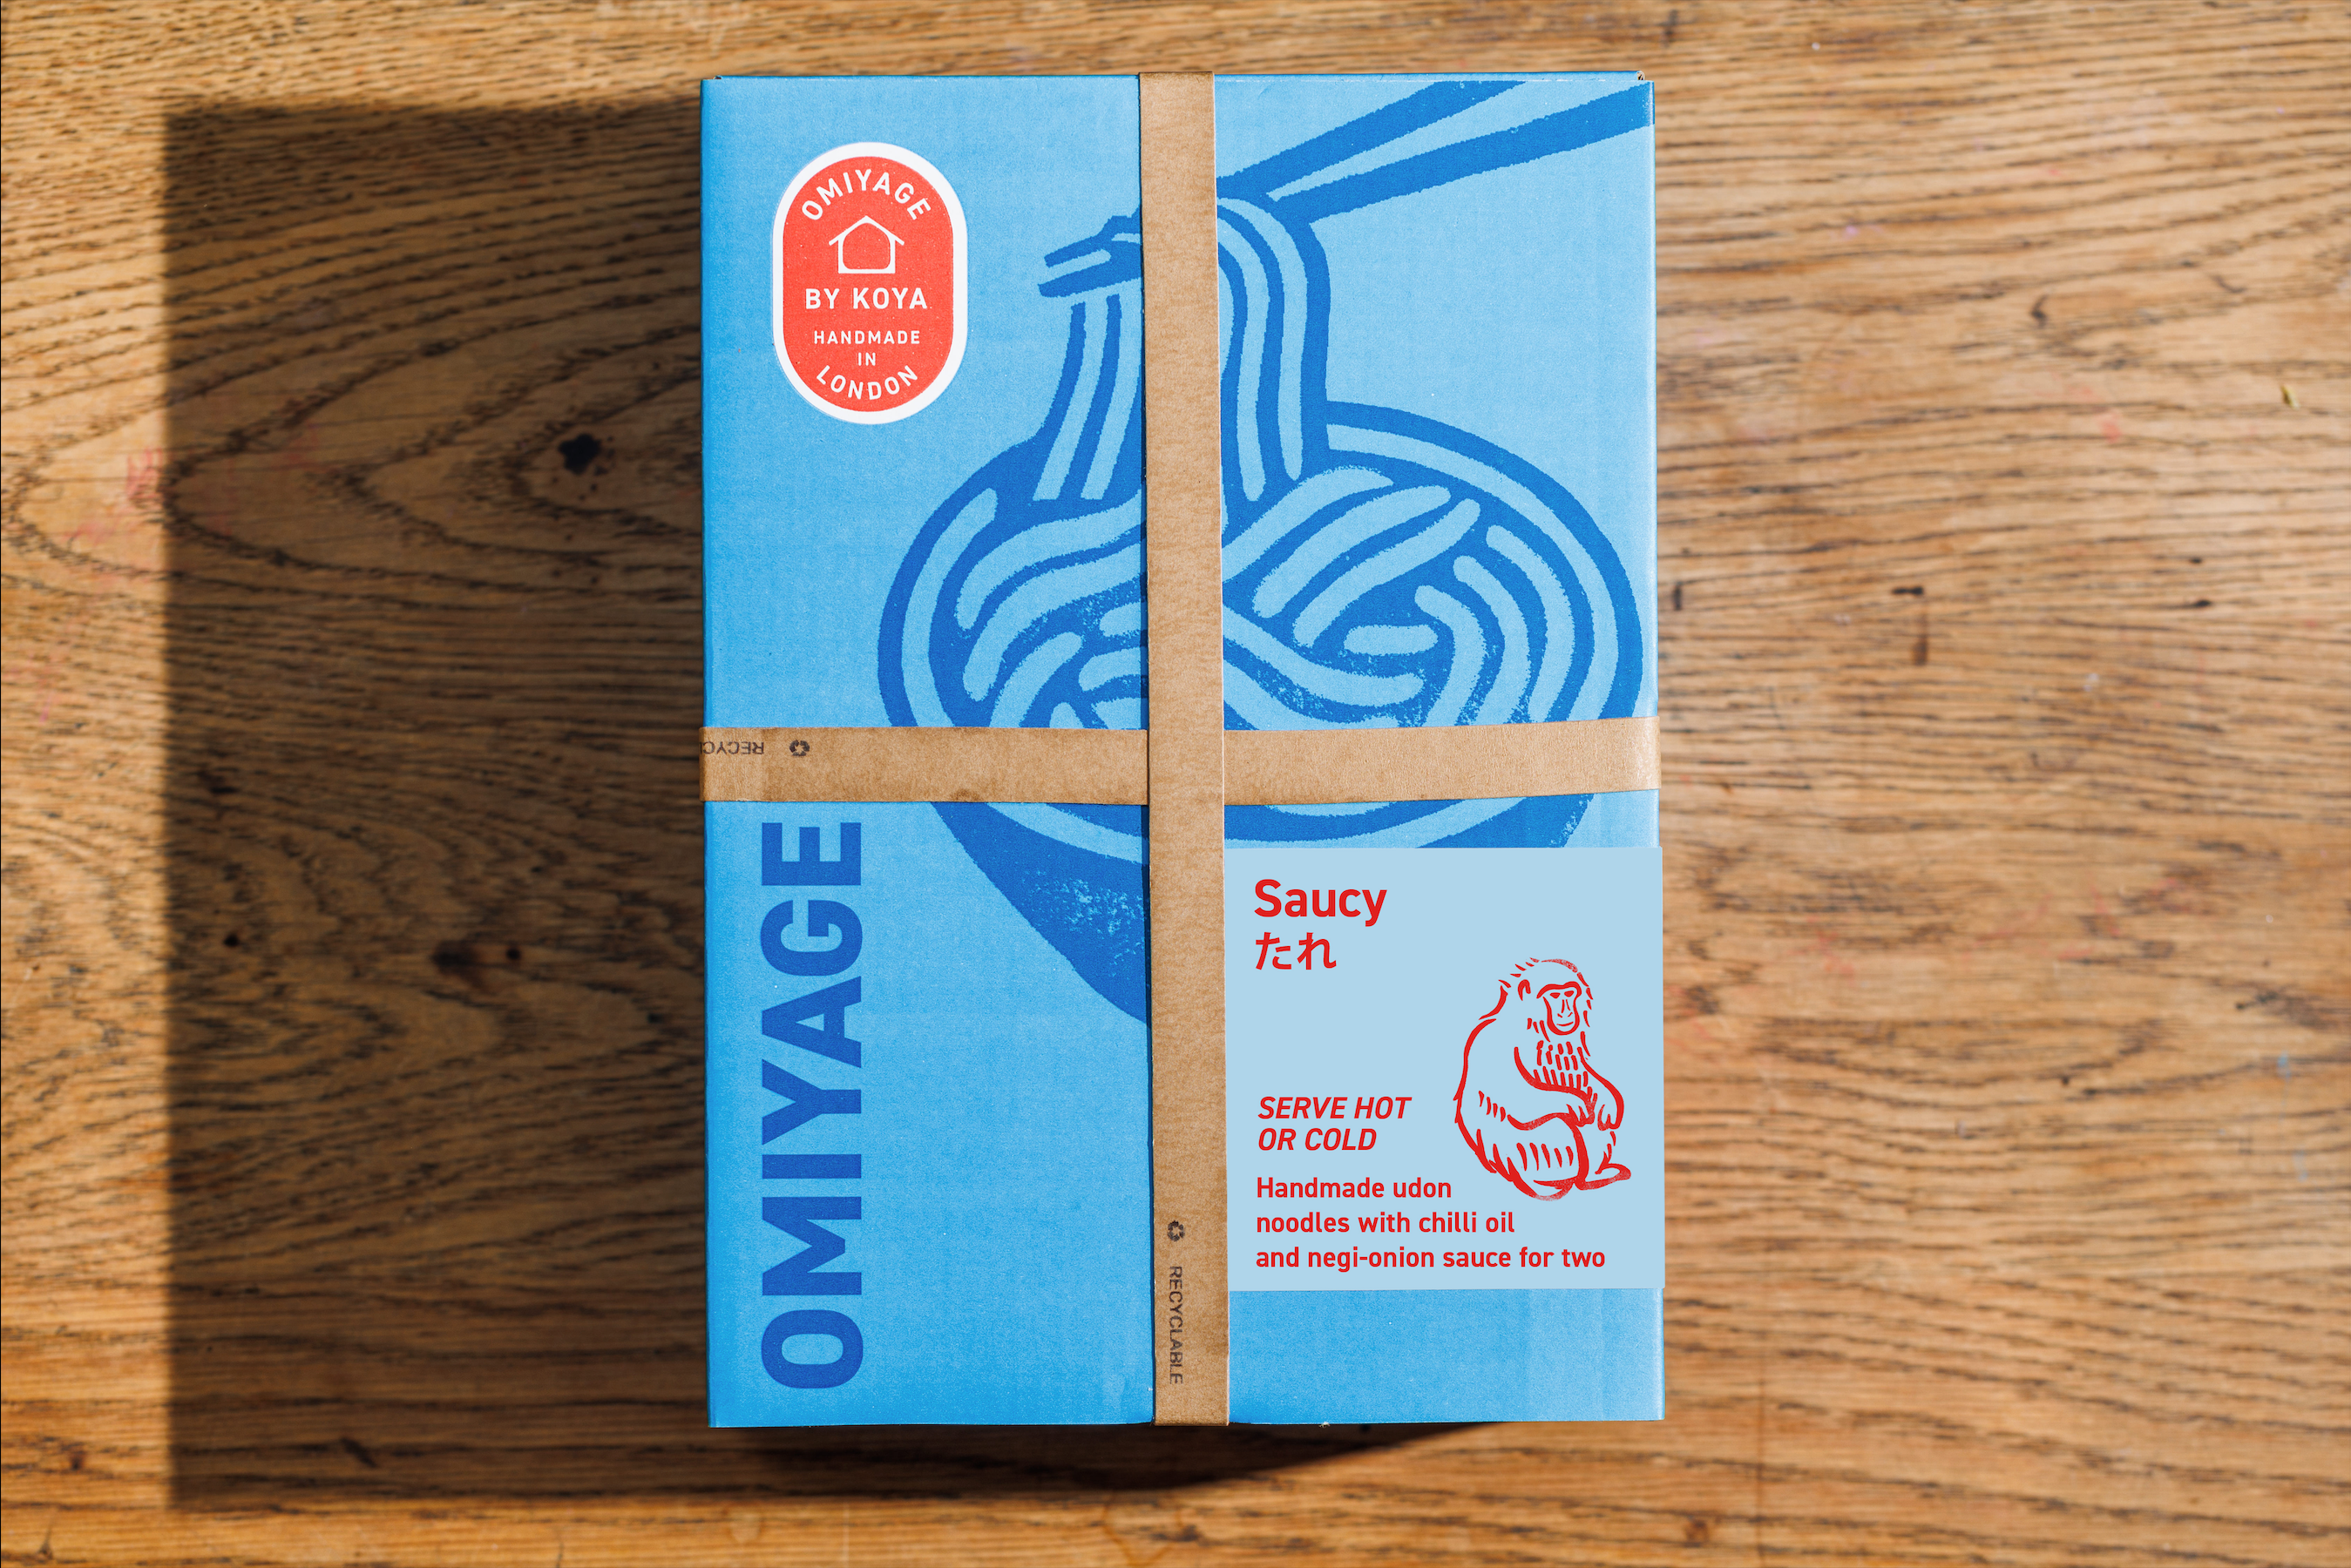 Omiyage (for 2) - Saucy (Vegan)